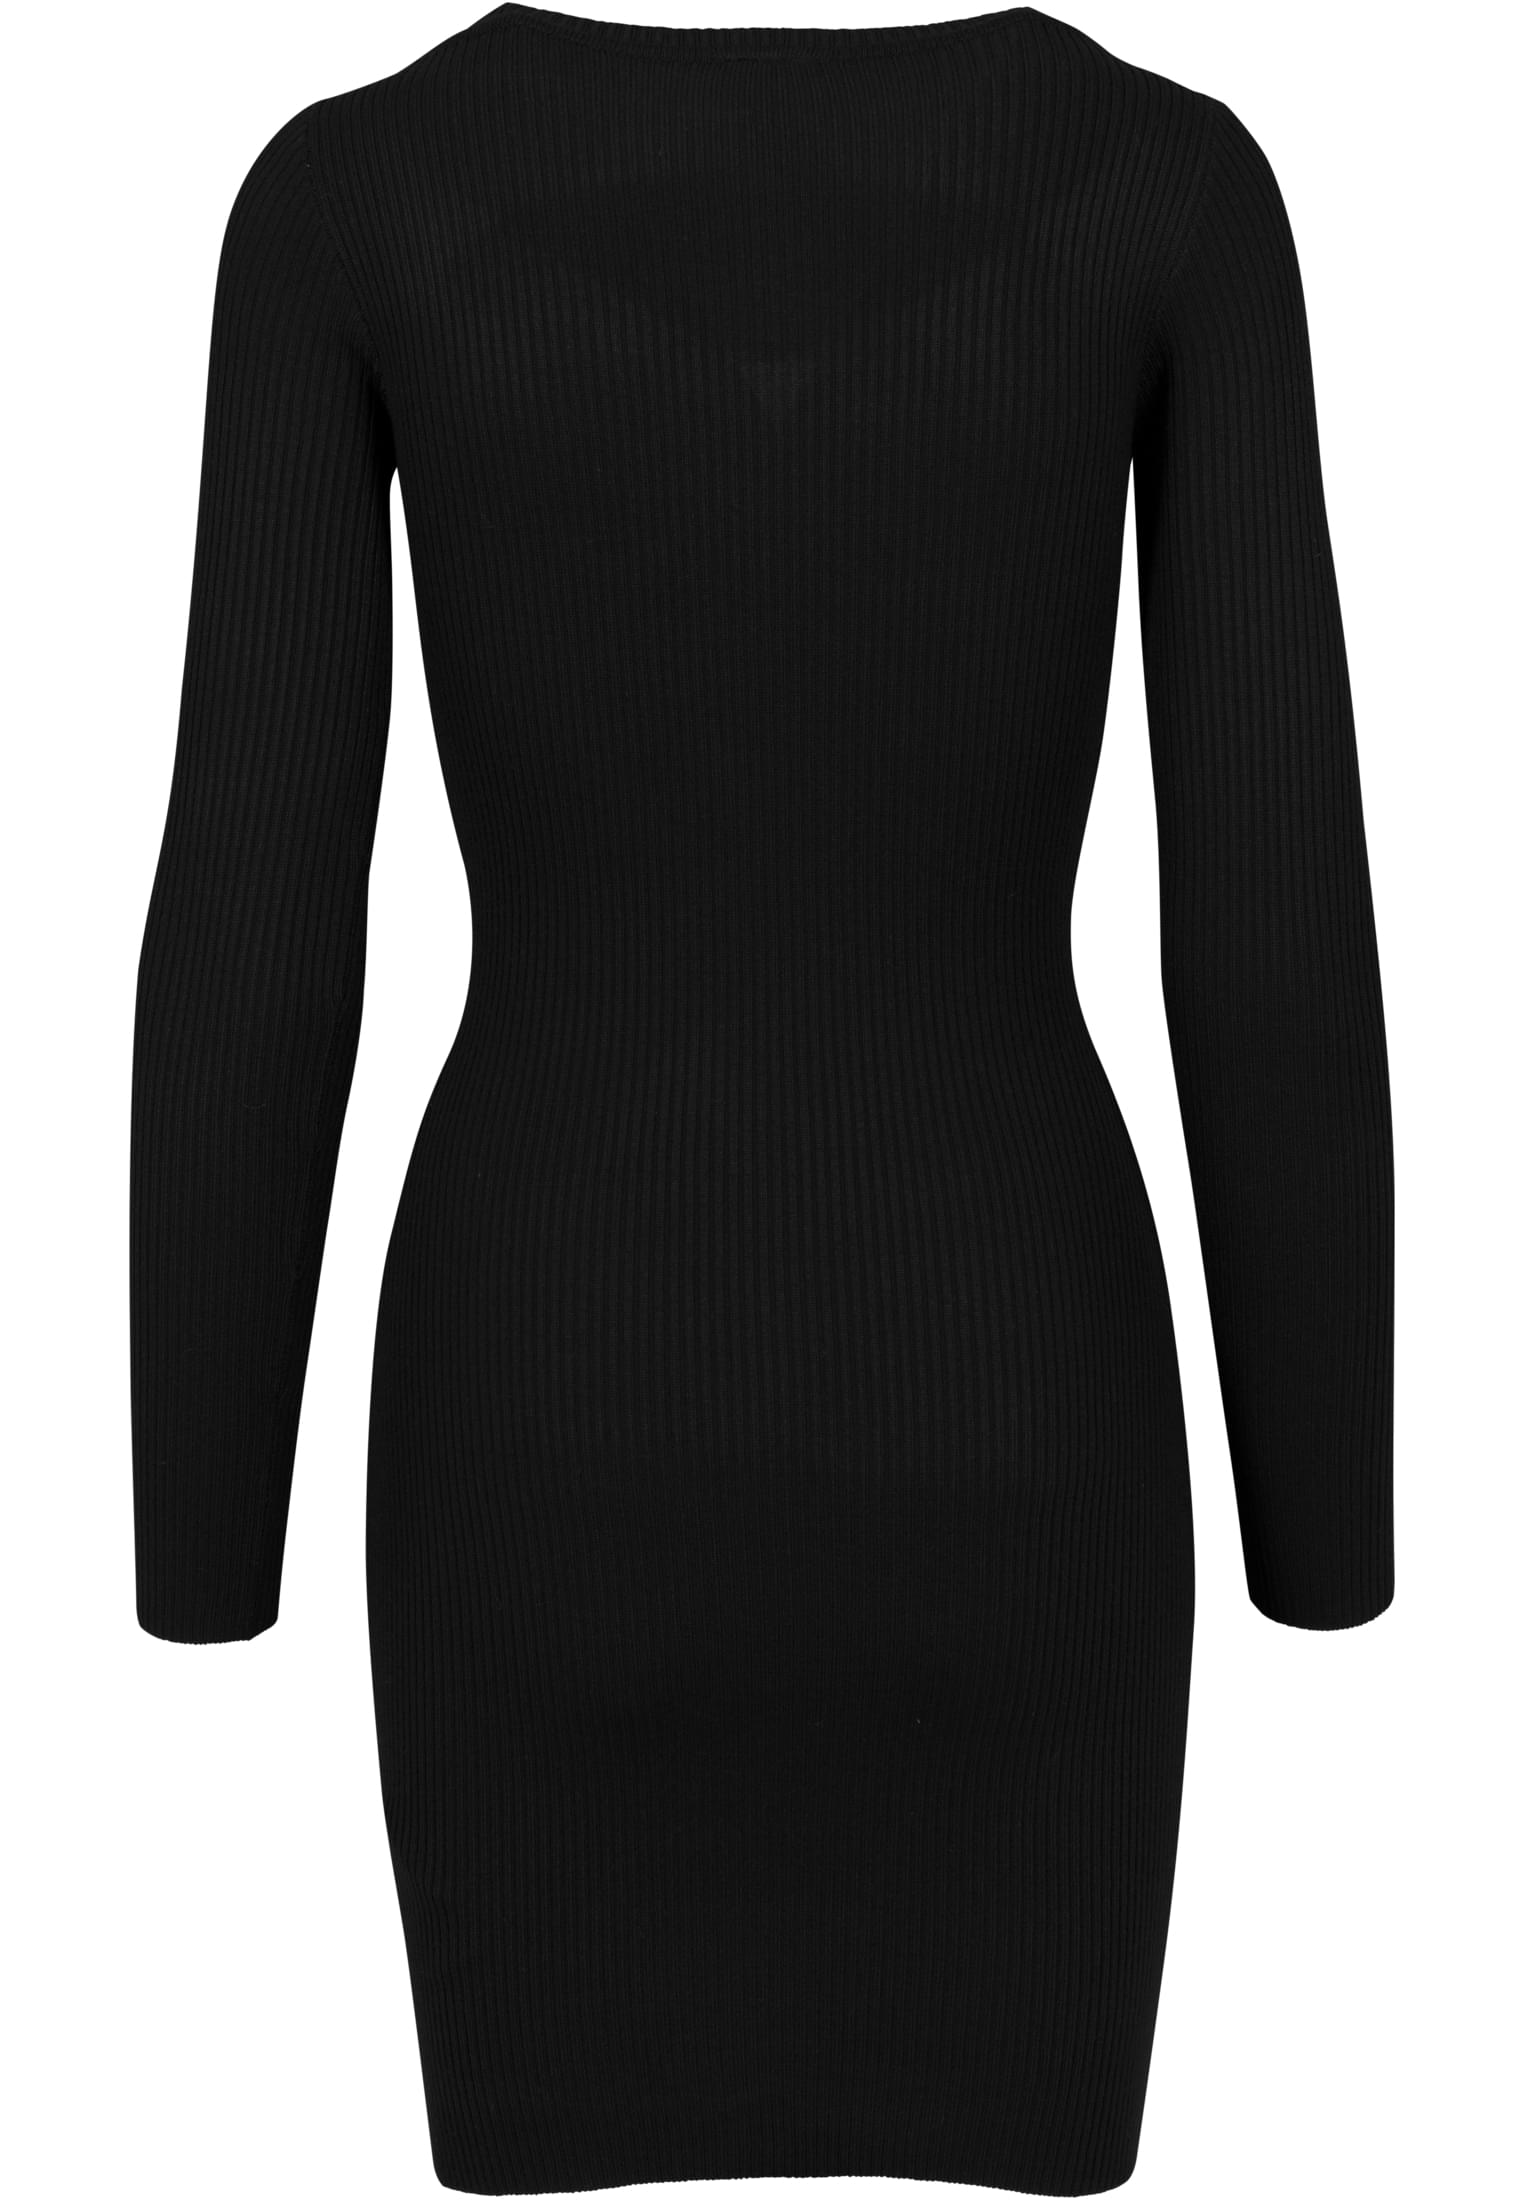 Damen Ladies Cut Out Dress in Farbe black